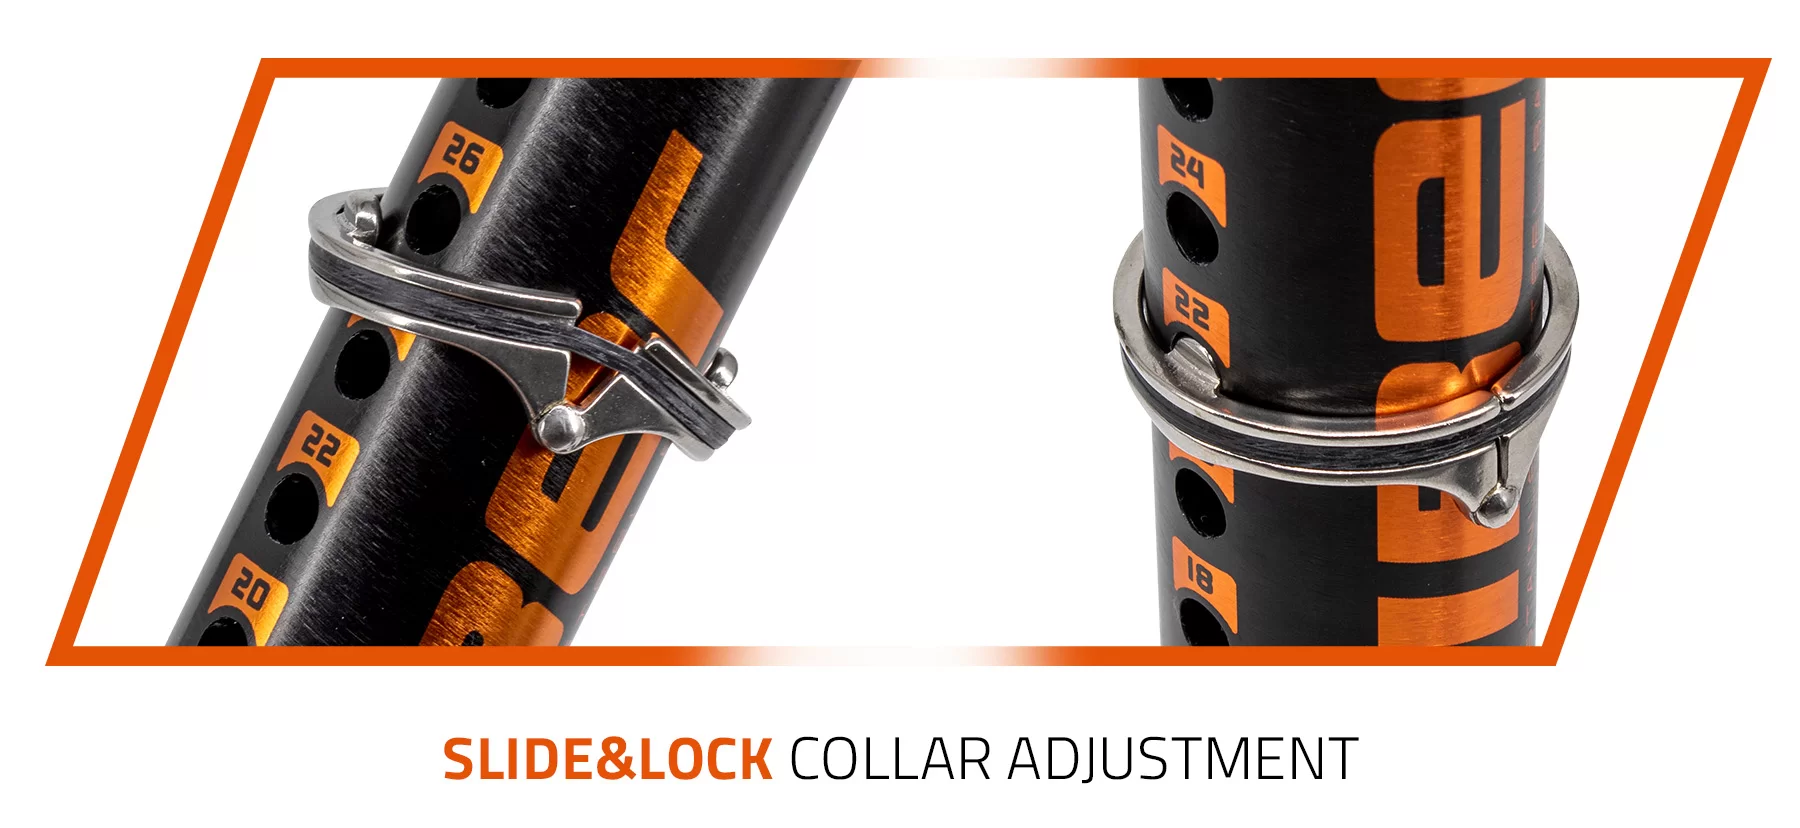 Extension Collar adjustment - Stainless Steel Open, Twist, Slide & Lock